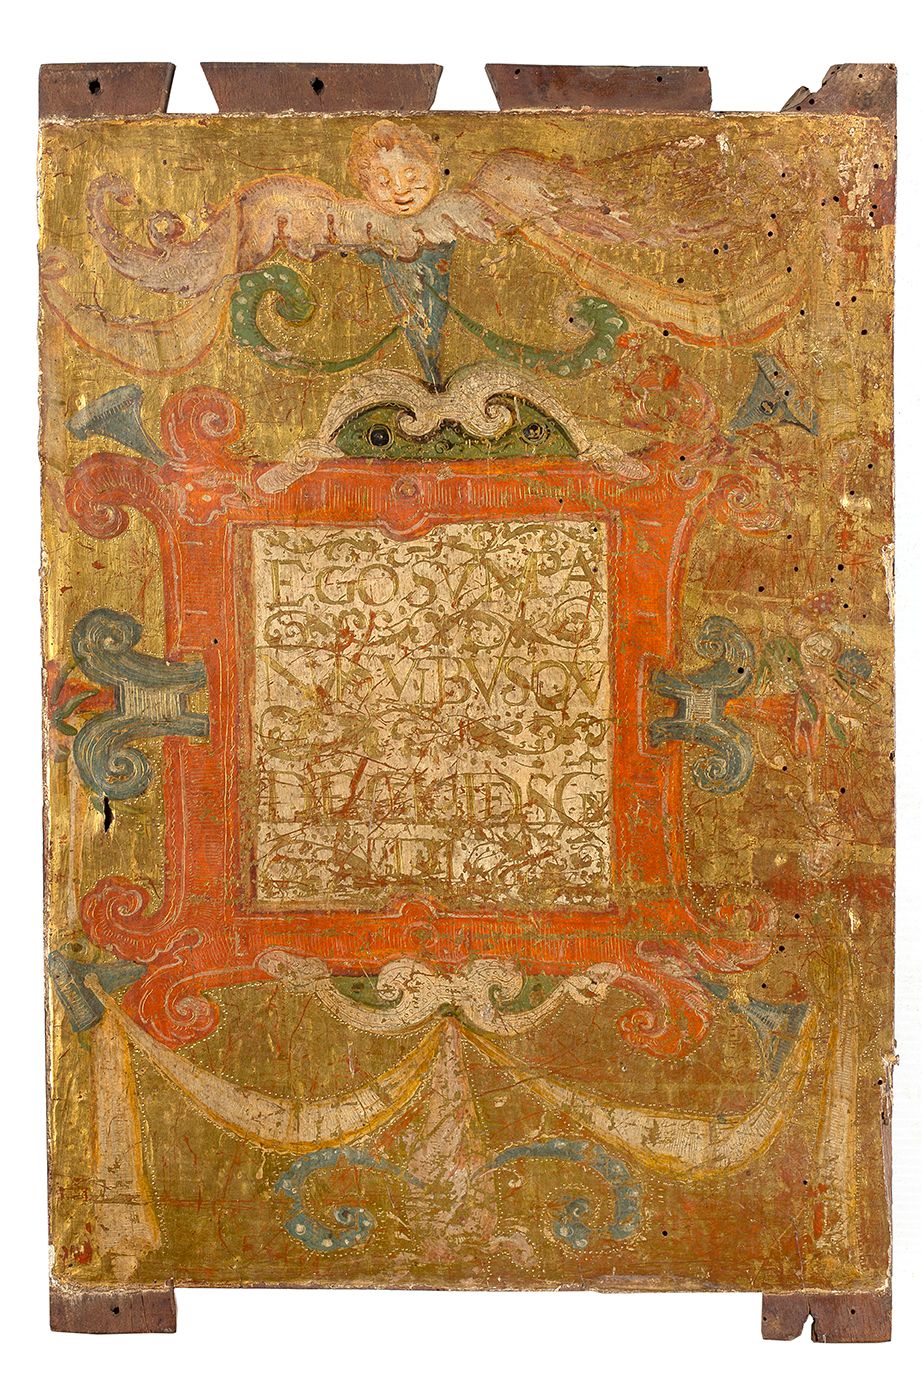 Null 胡桃木板，多色和镀金，装饰有带有拉丁文题词的方框。
西班牙，16世纪
高42厘米-宽28厘米
 （有些磨损）